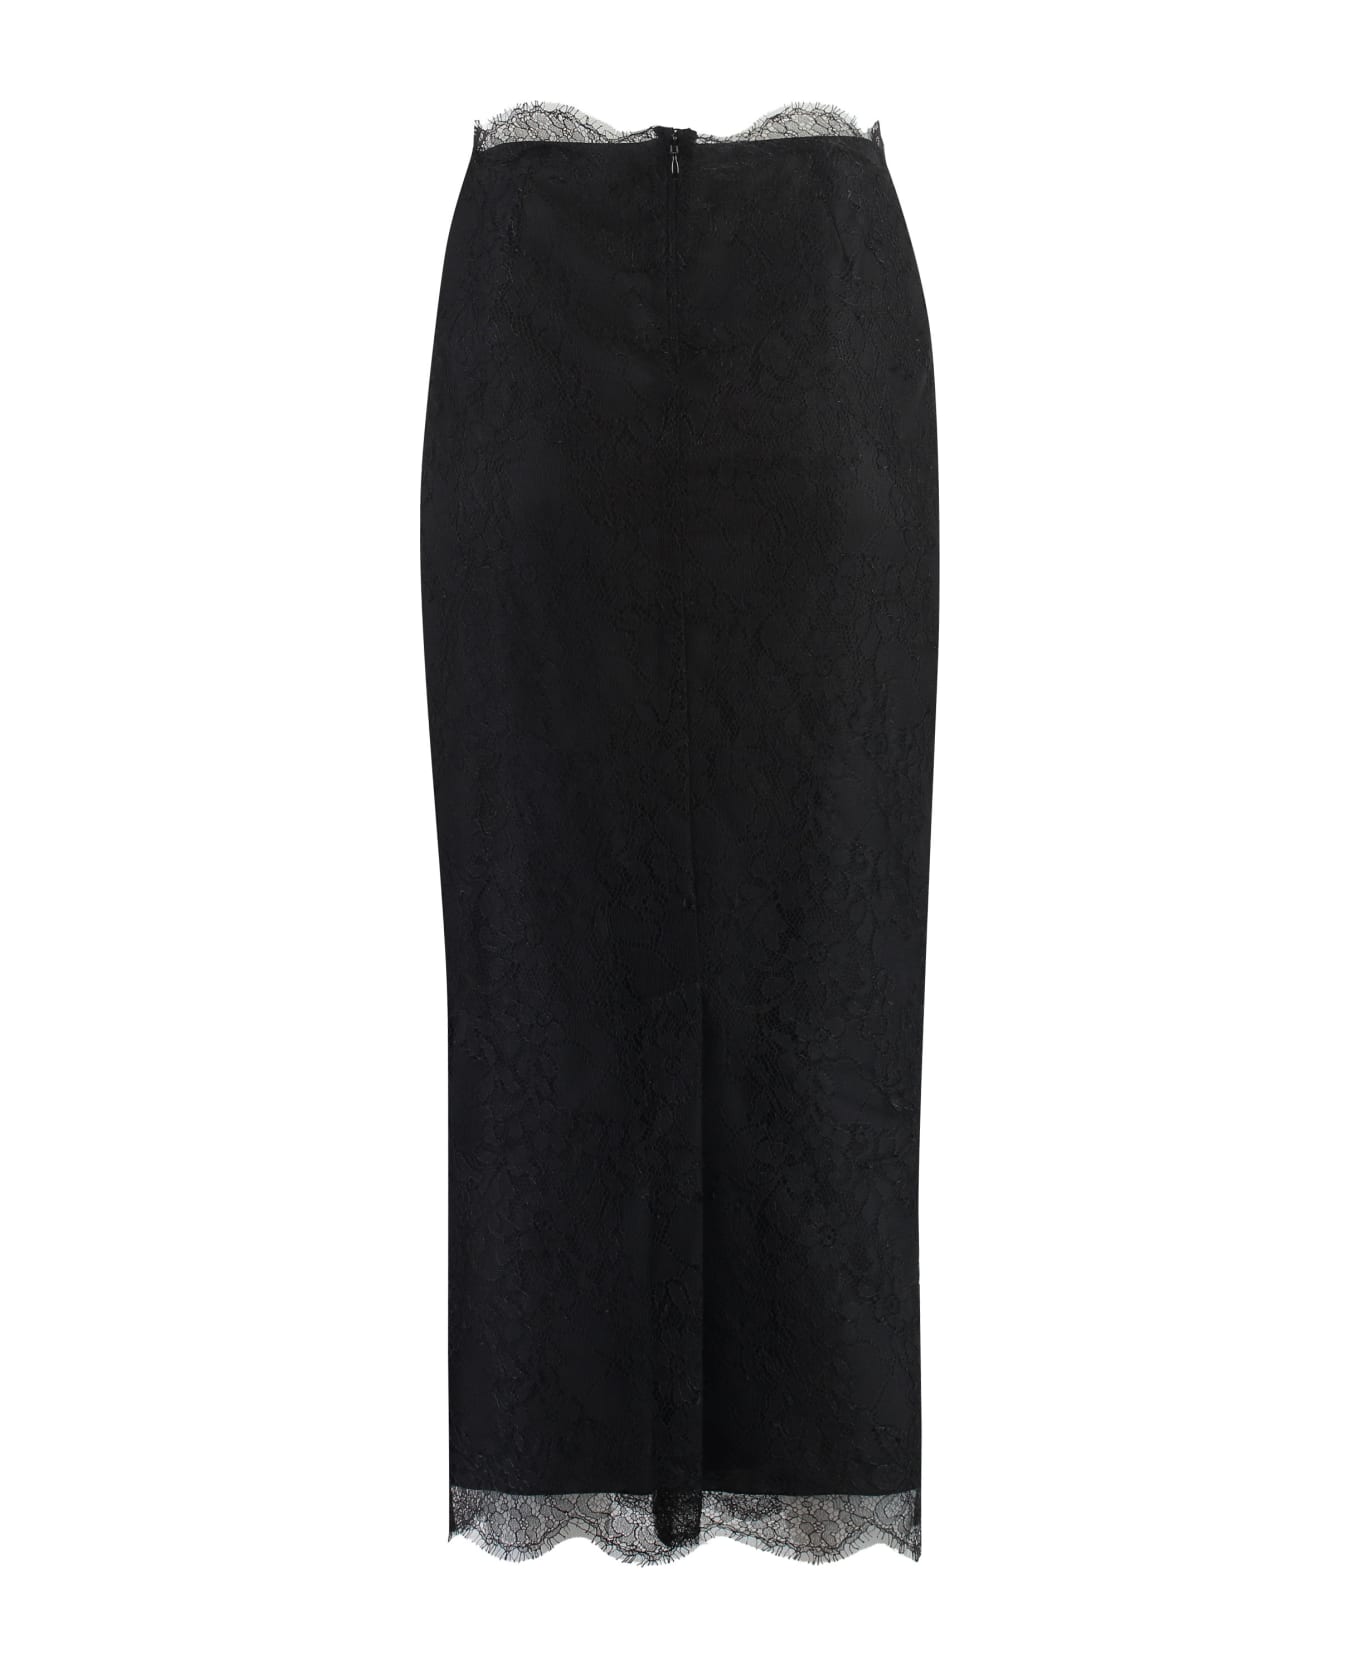 Dolce & Gabbana Lace Pencil Skirt - black